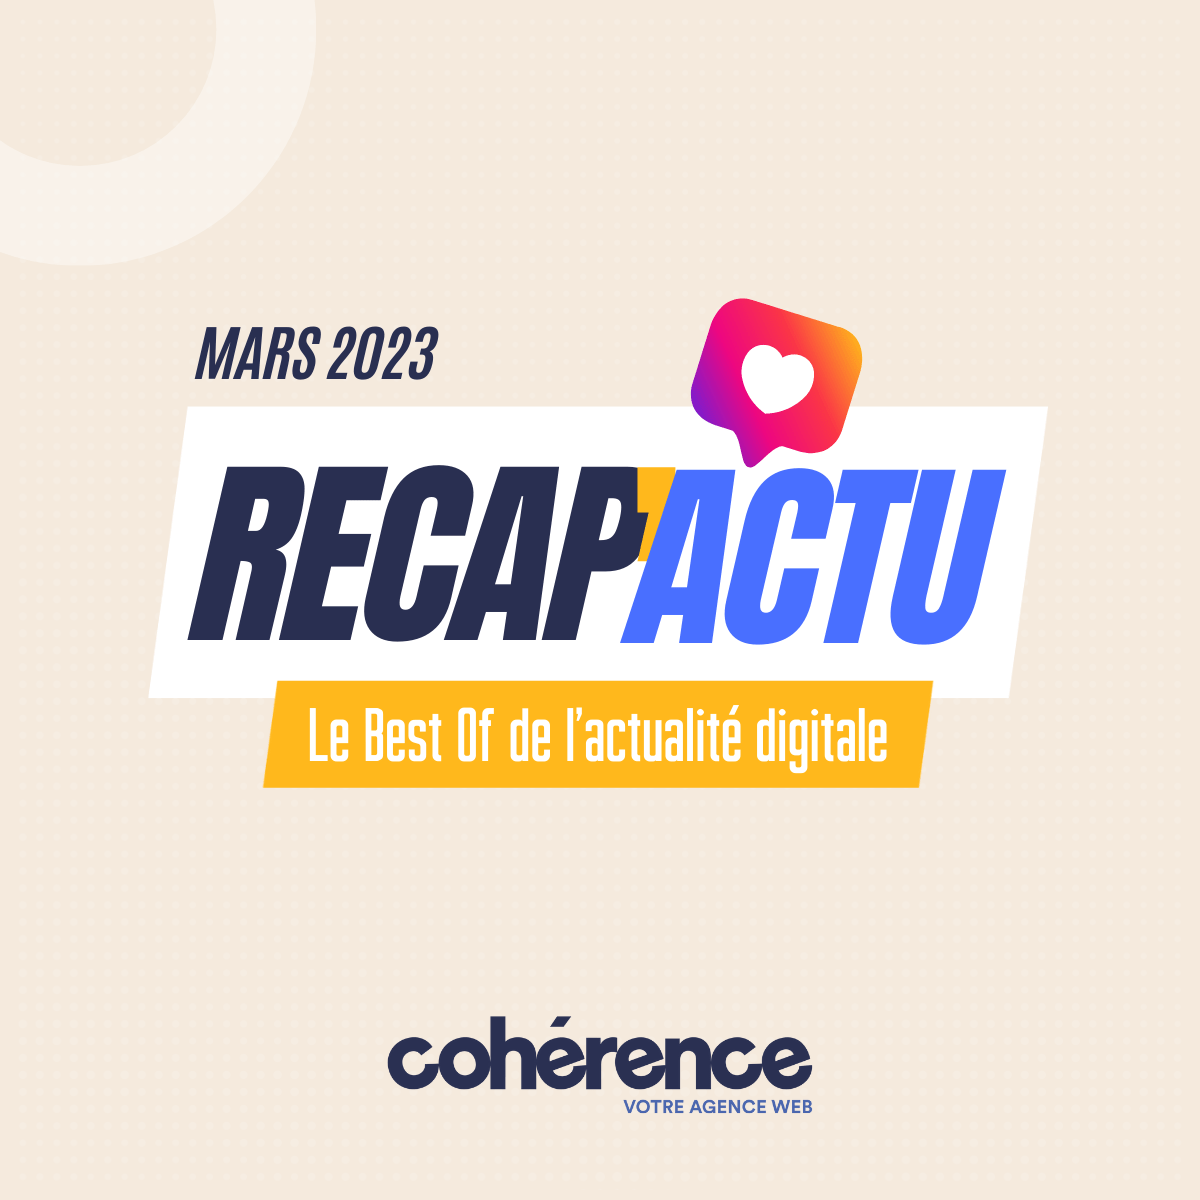 Coherence Agence Web A Rennes Le Best Of De Lactualite Digitale – Mars 2023